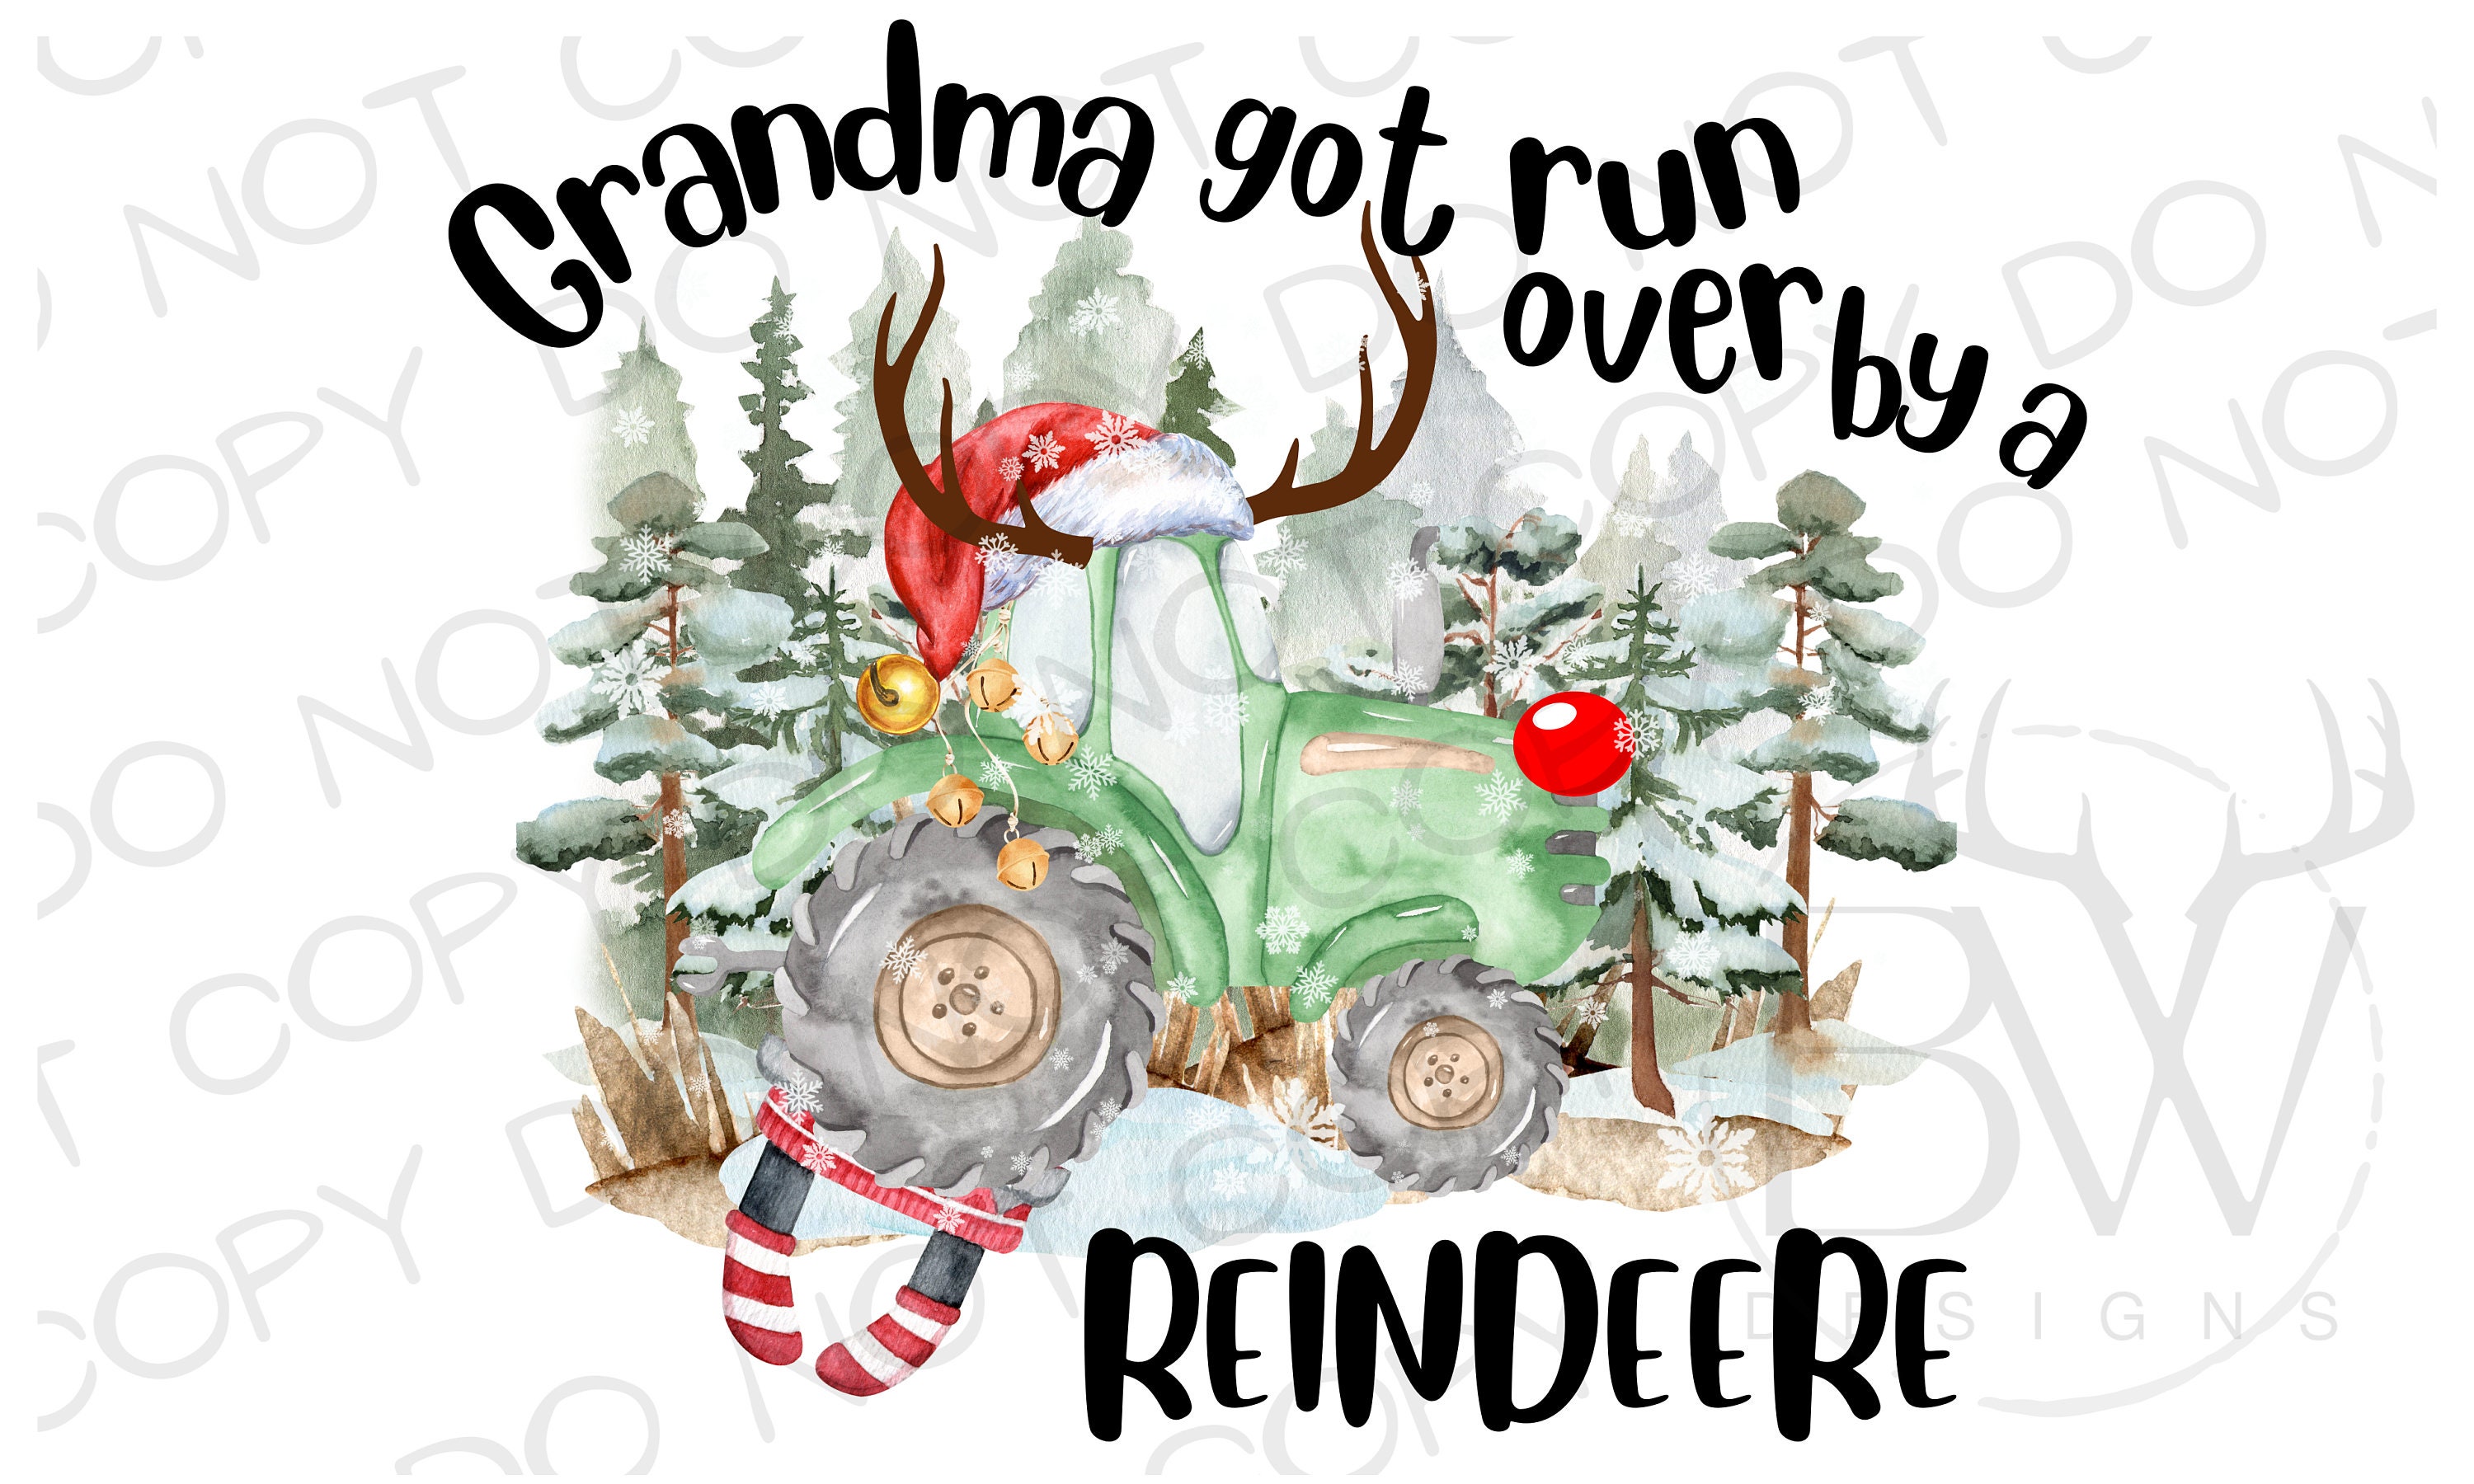 Grandma Got Run Over - Etsy